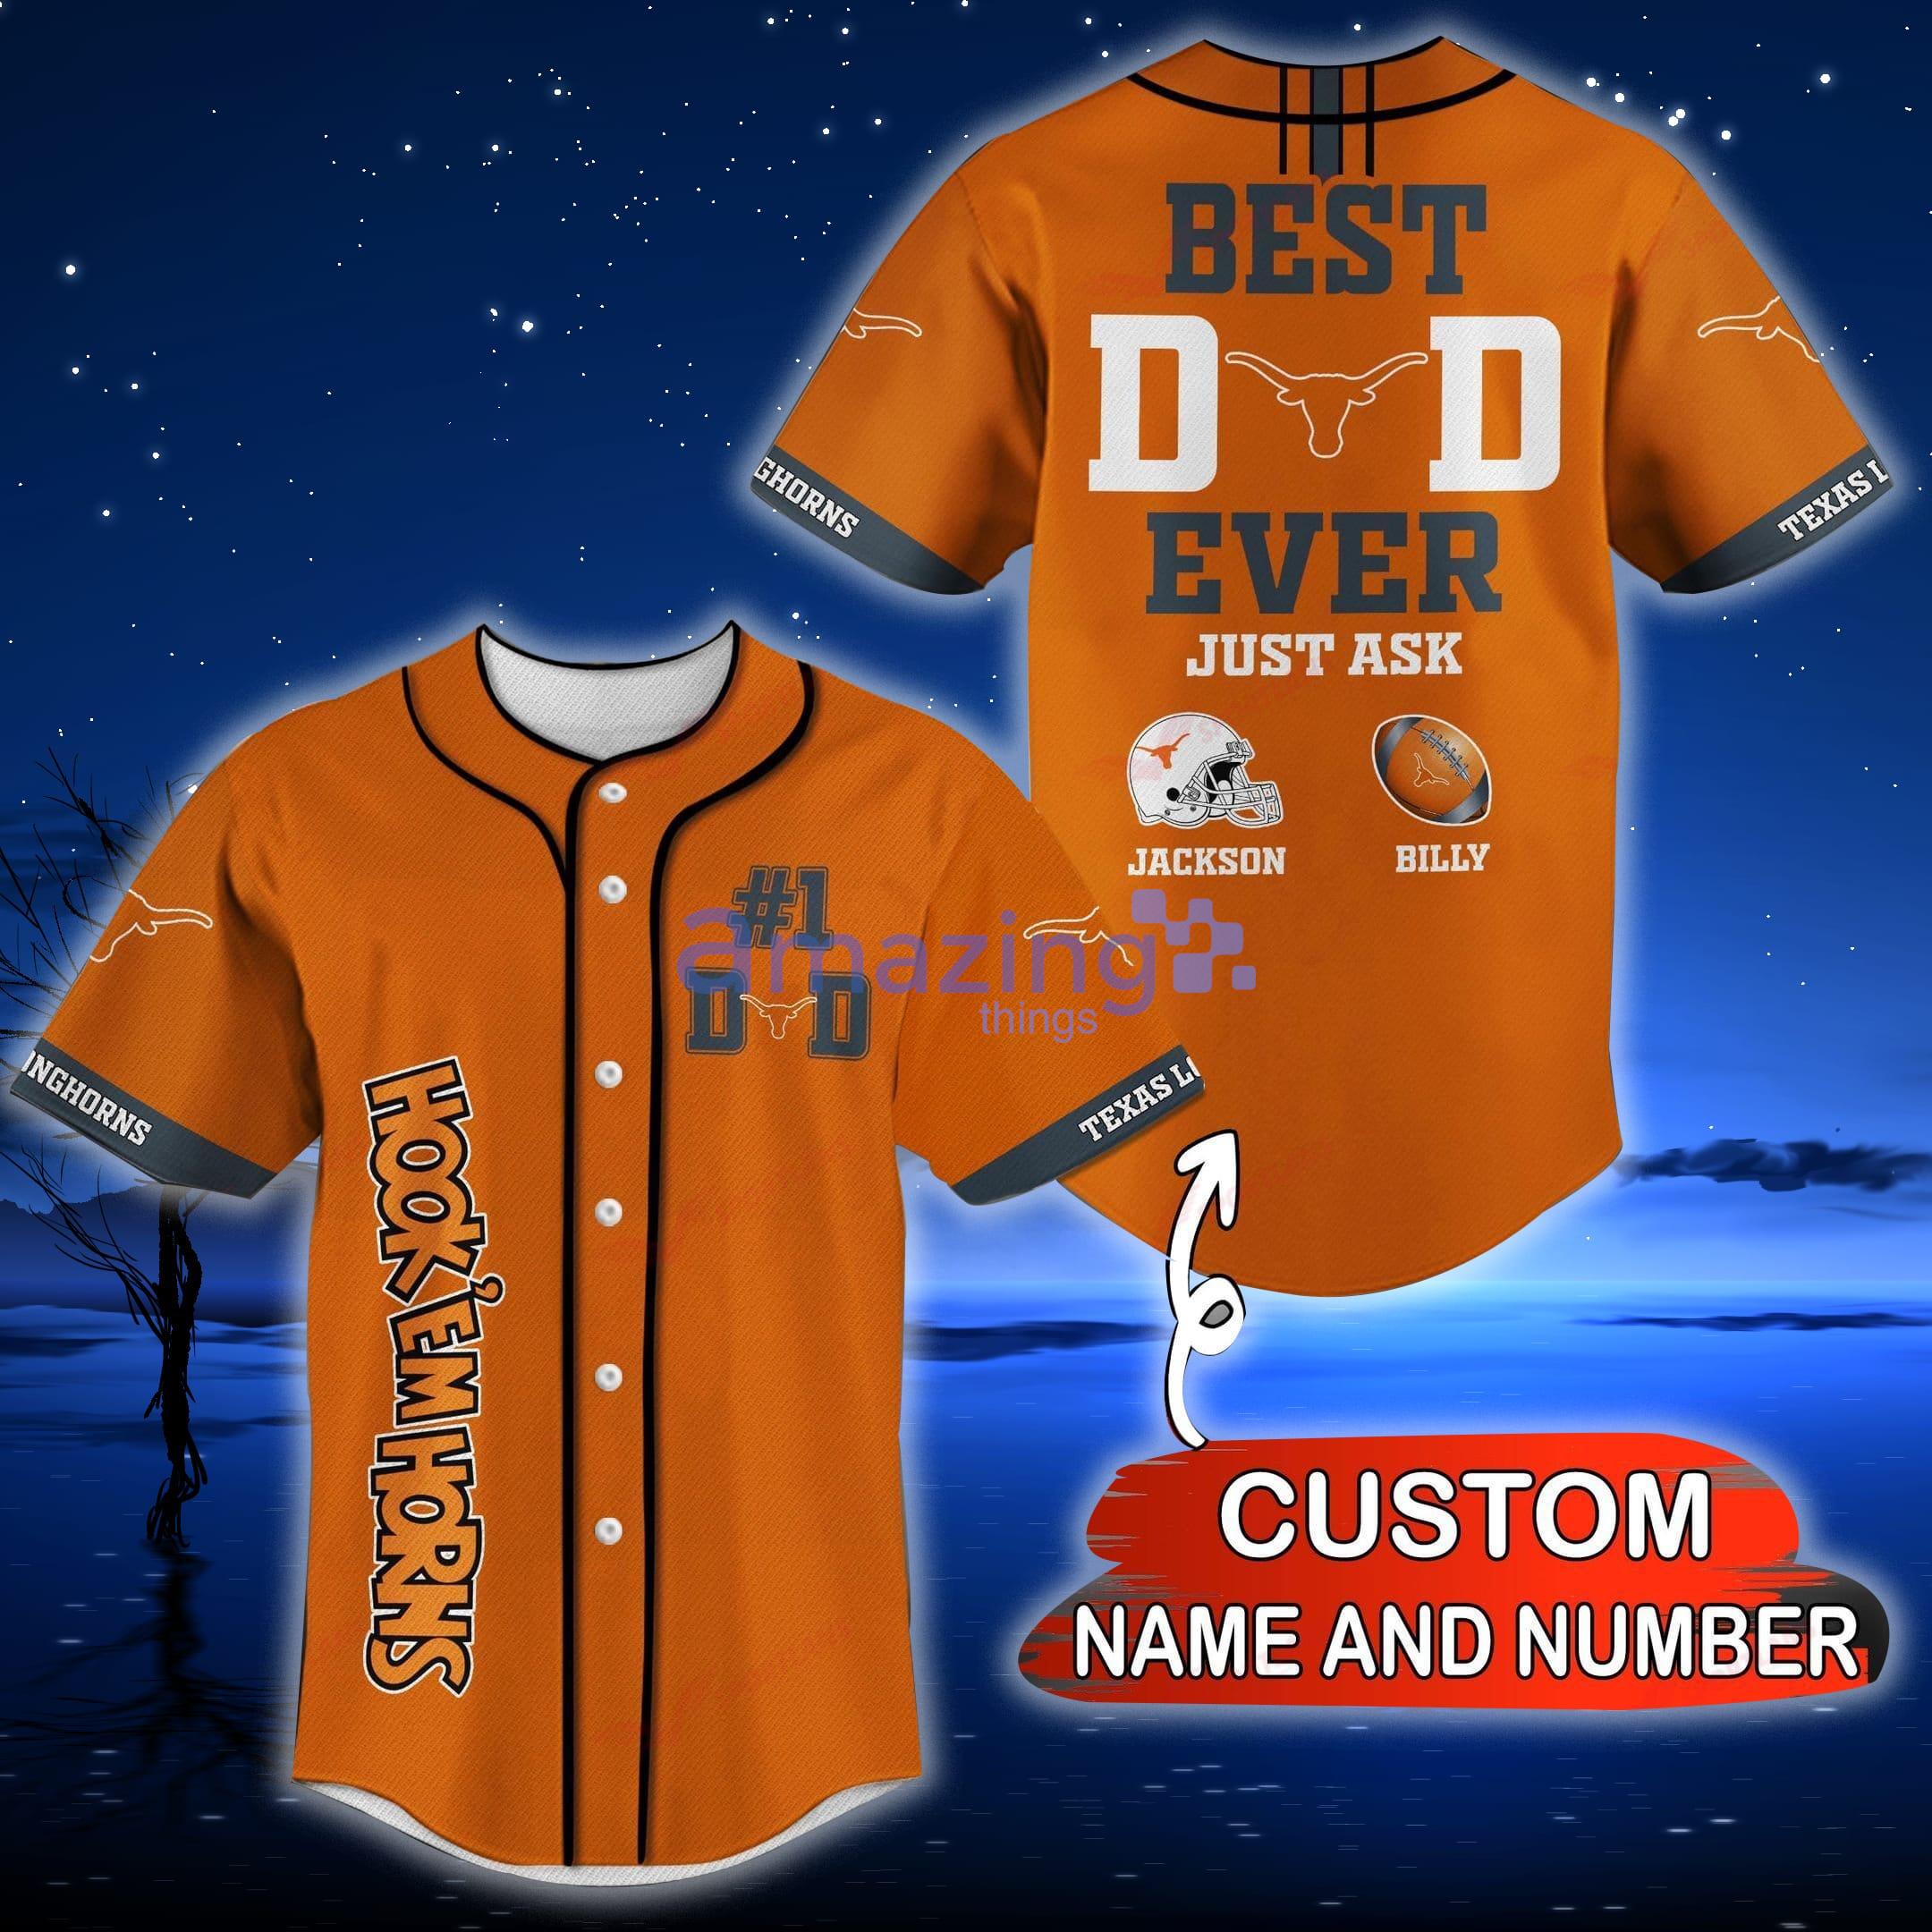 authentic texas longhorns baseball jersey